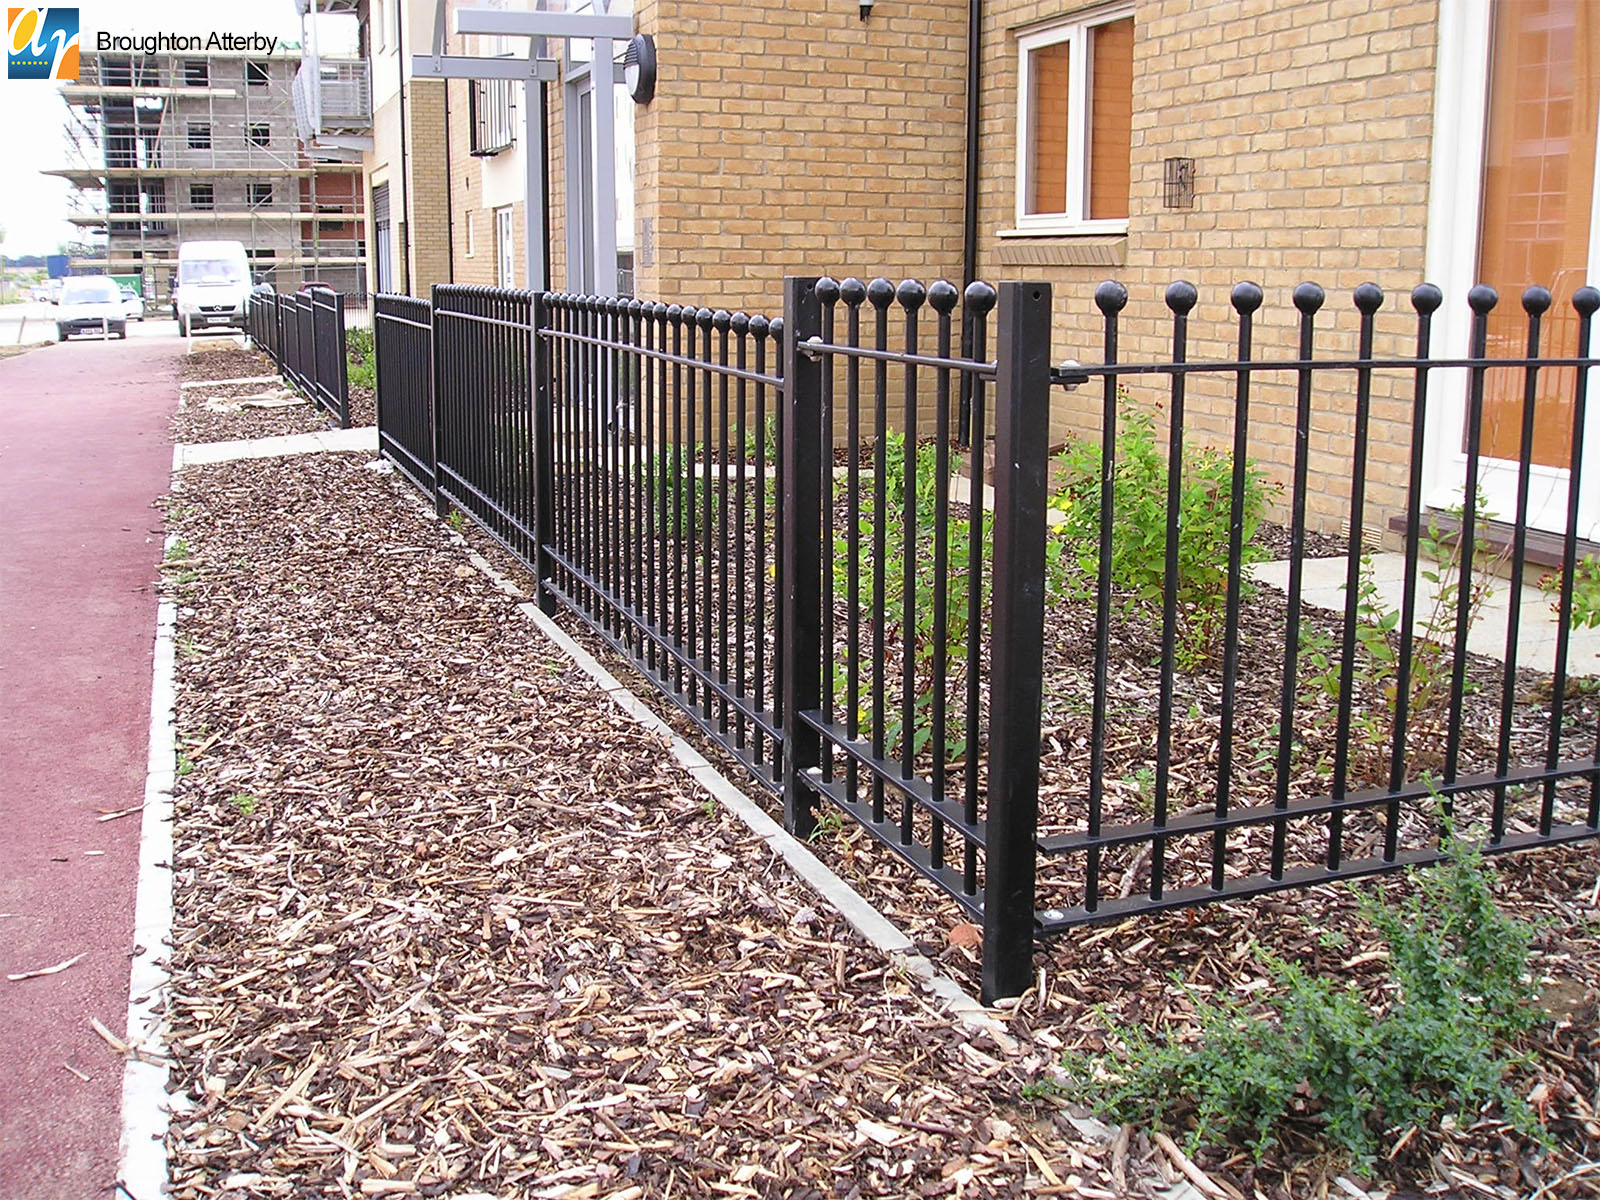 Metal railings for housing estates